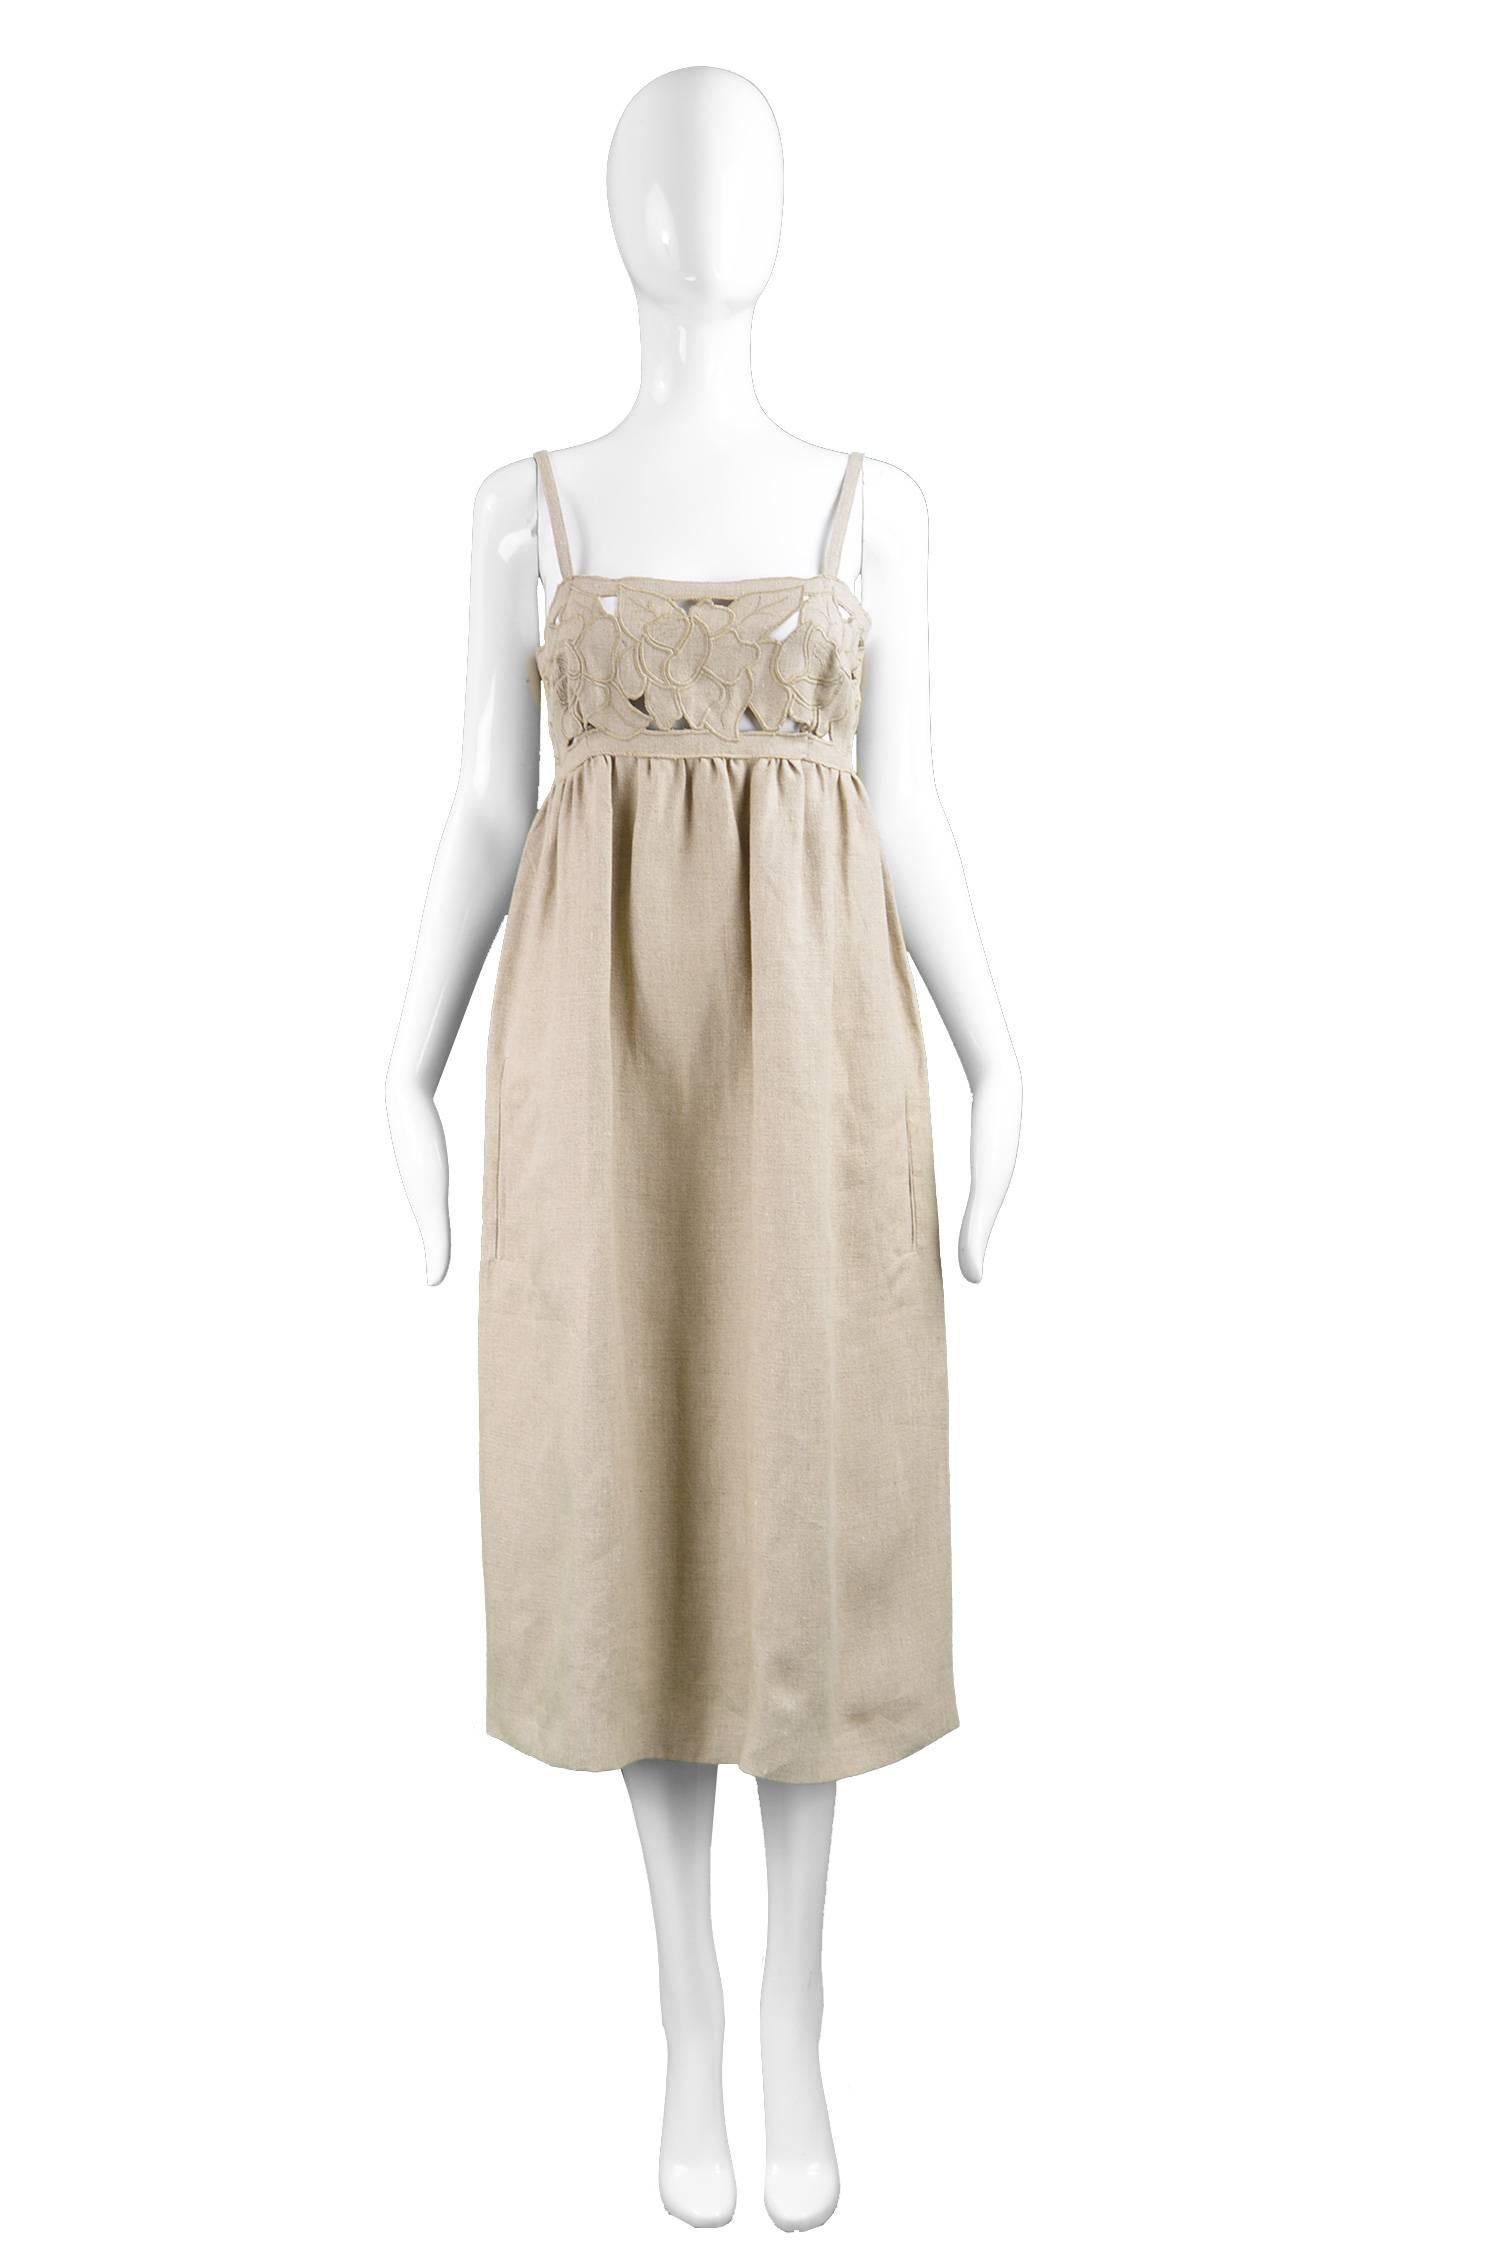 Krizia Sheer Embroidered Cutwork Oatmeal Linen Vintage Dress, 1970s


Estimated Size: UK 8/ US 4/ EU 36. Please check measurements
Bust - 32" / 81cm
Empire Waist - 29" / 74cm
Hips - up to 44" / 112cm
Length (shoulder to hem) -